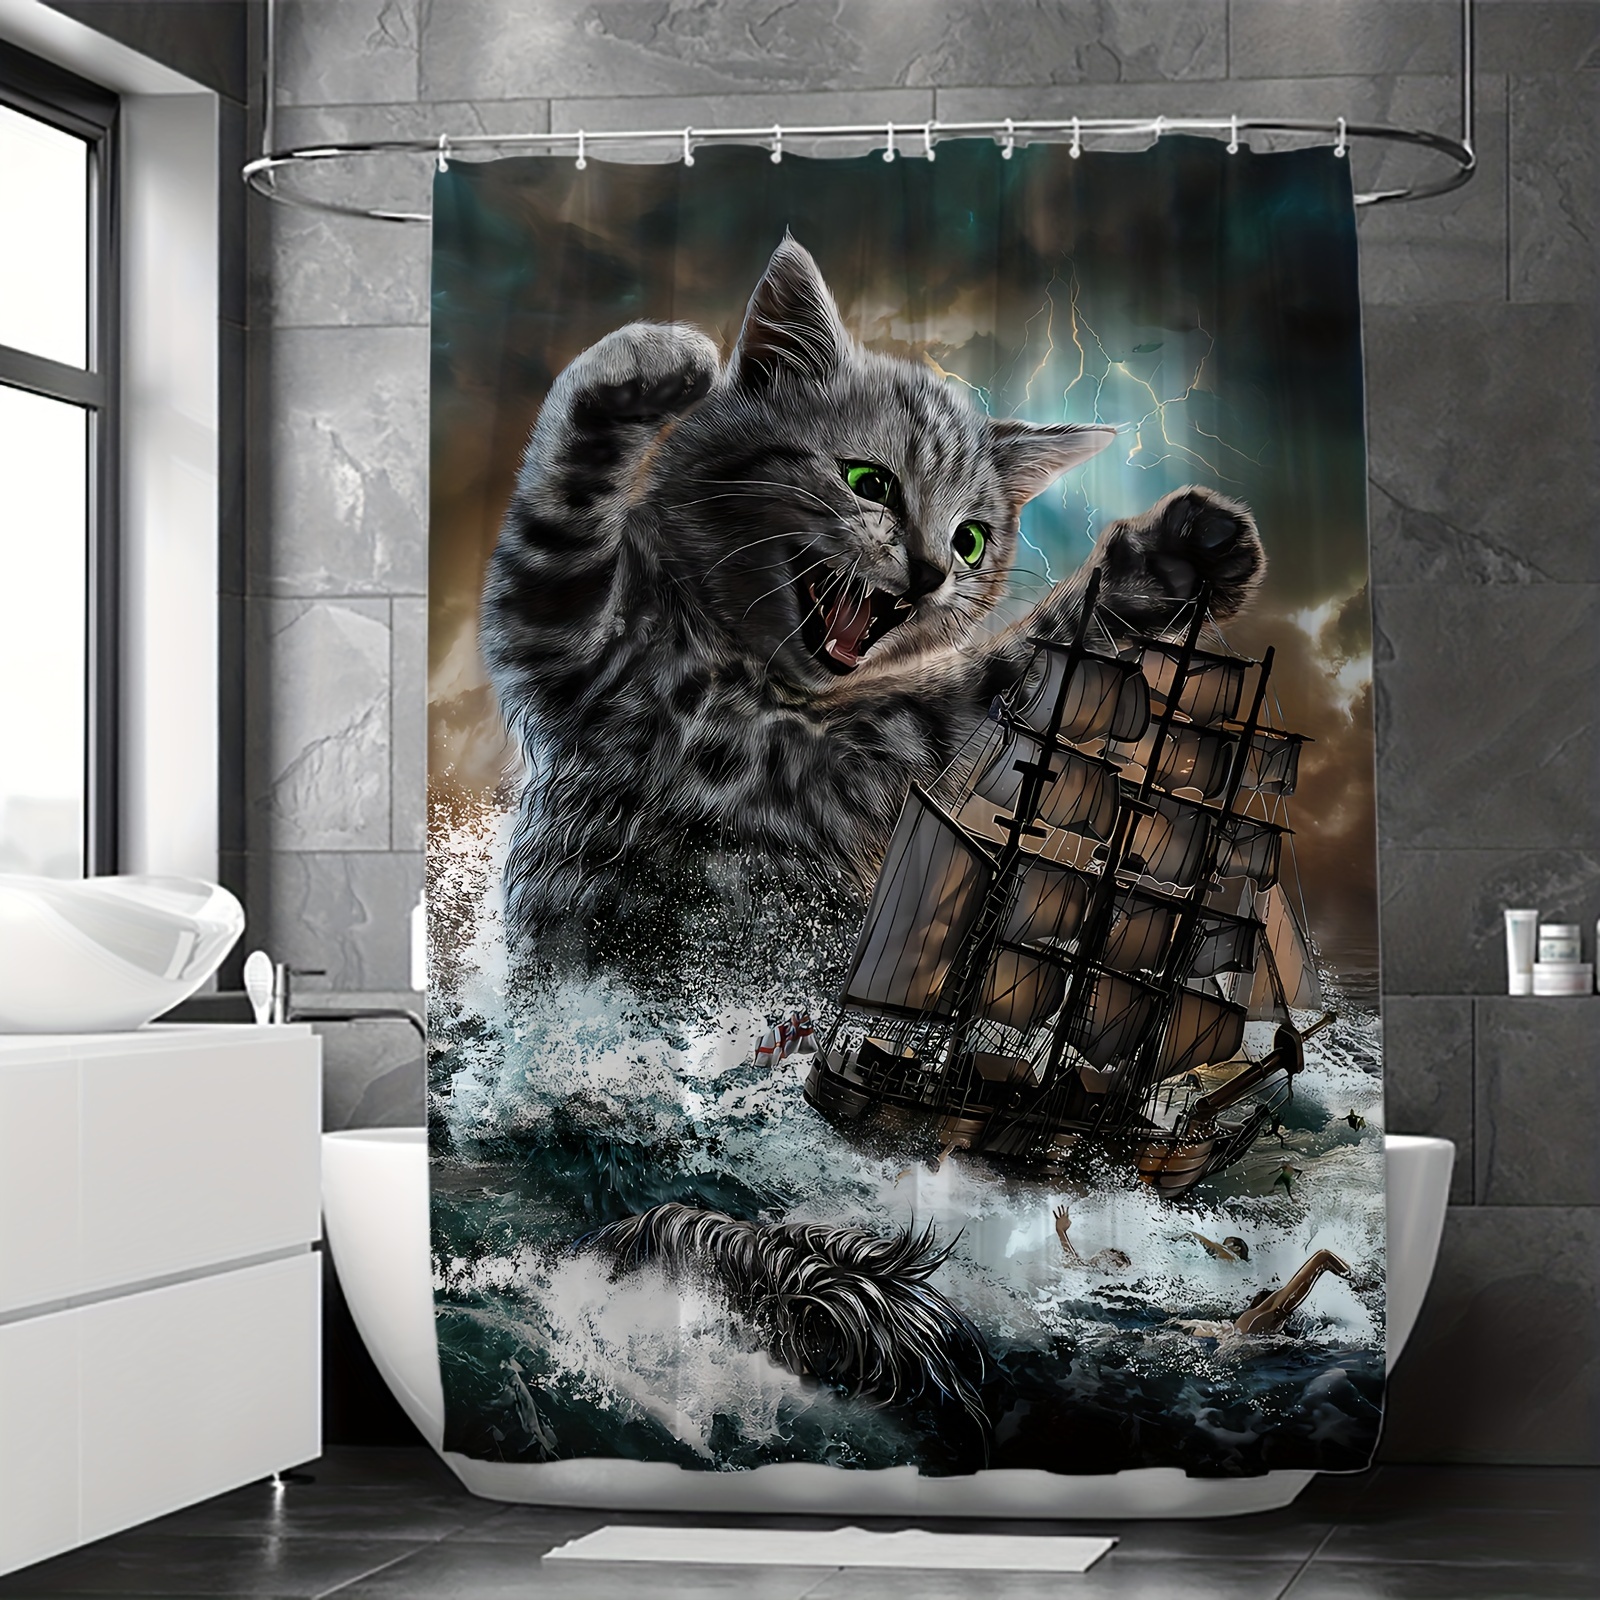 Cortina de ducha divertida de la serie del gato que imprime la